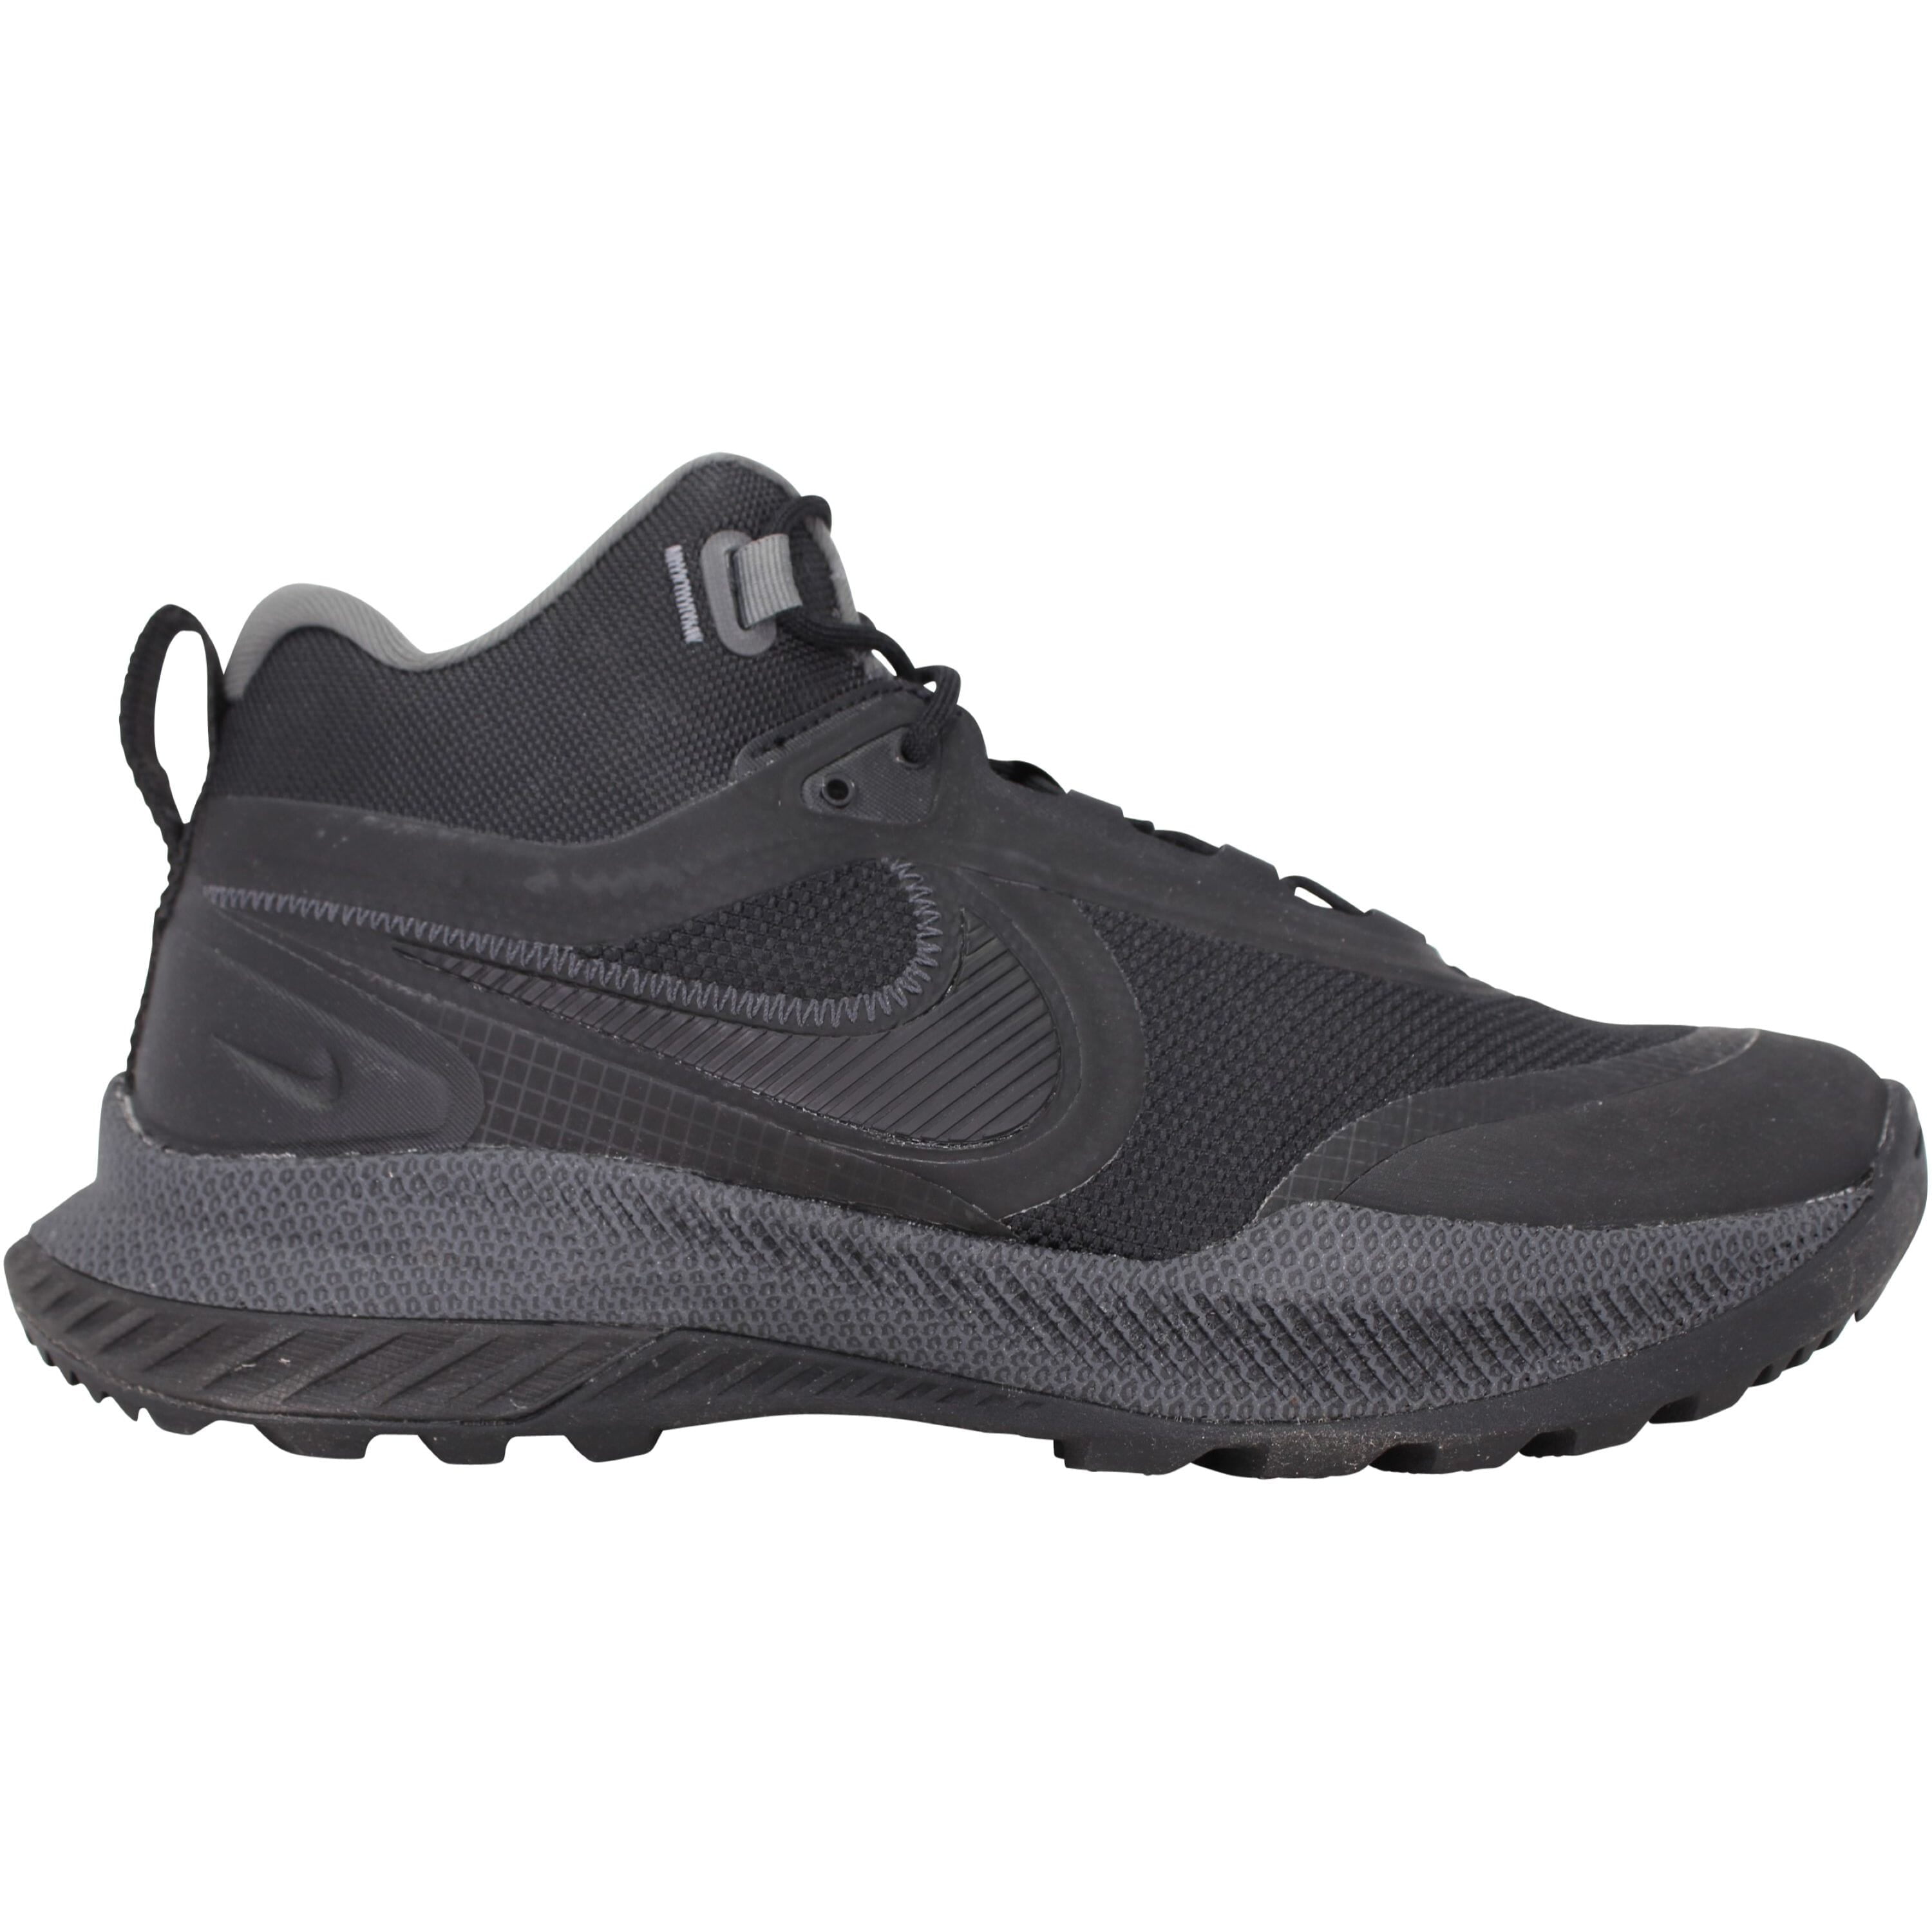 Nike React SFB Carbon Black/Black-Anthracite CK9951-001 Men's Size 10.5 ...